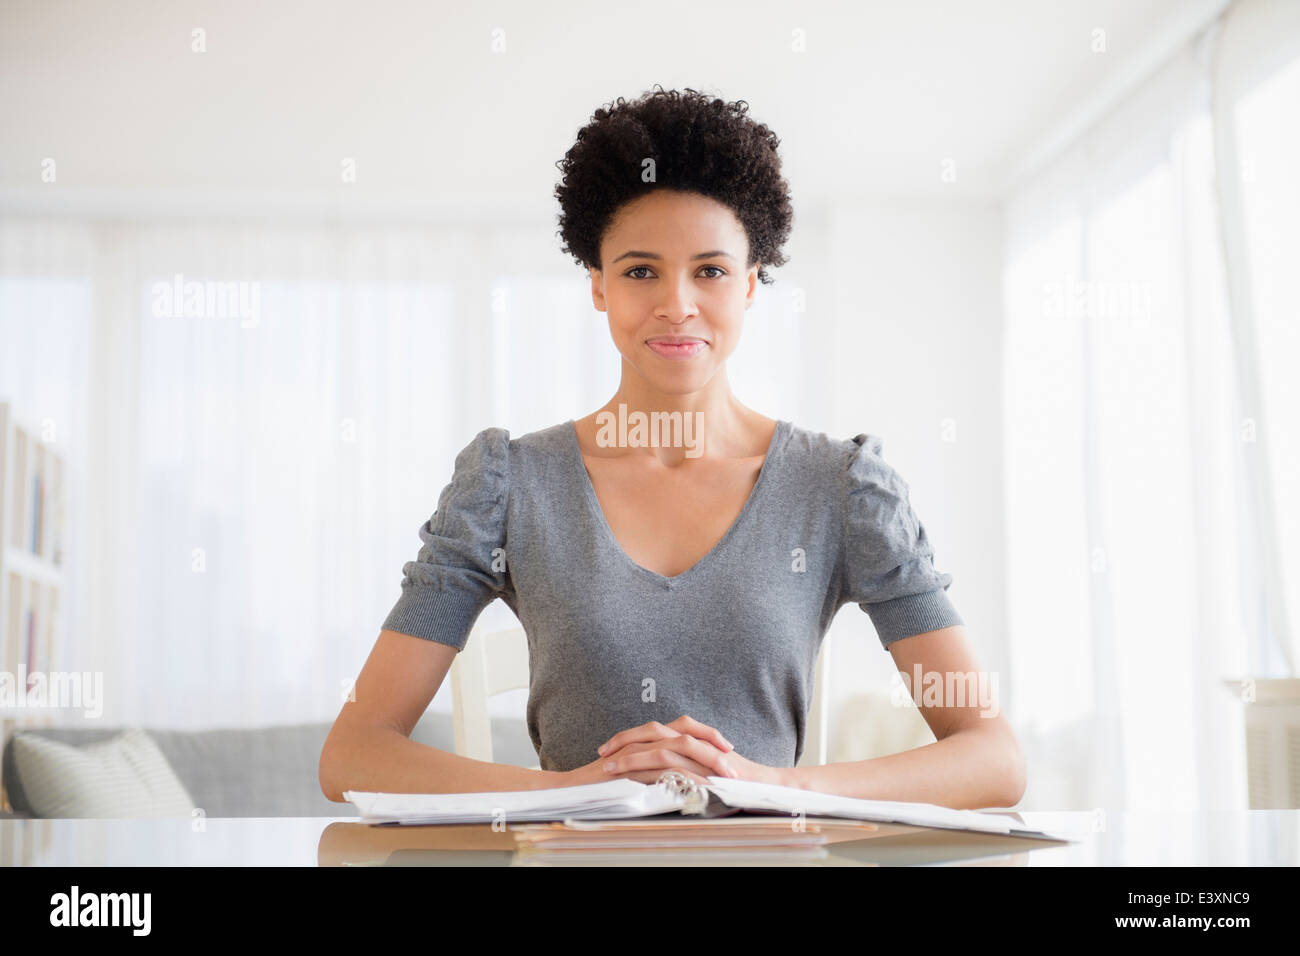 Black woman working at desk Banque D'Images